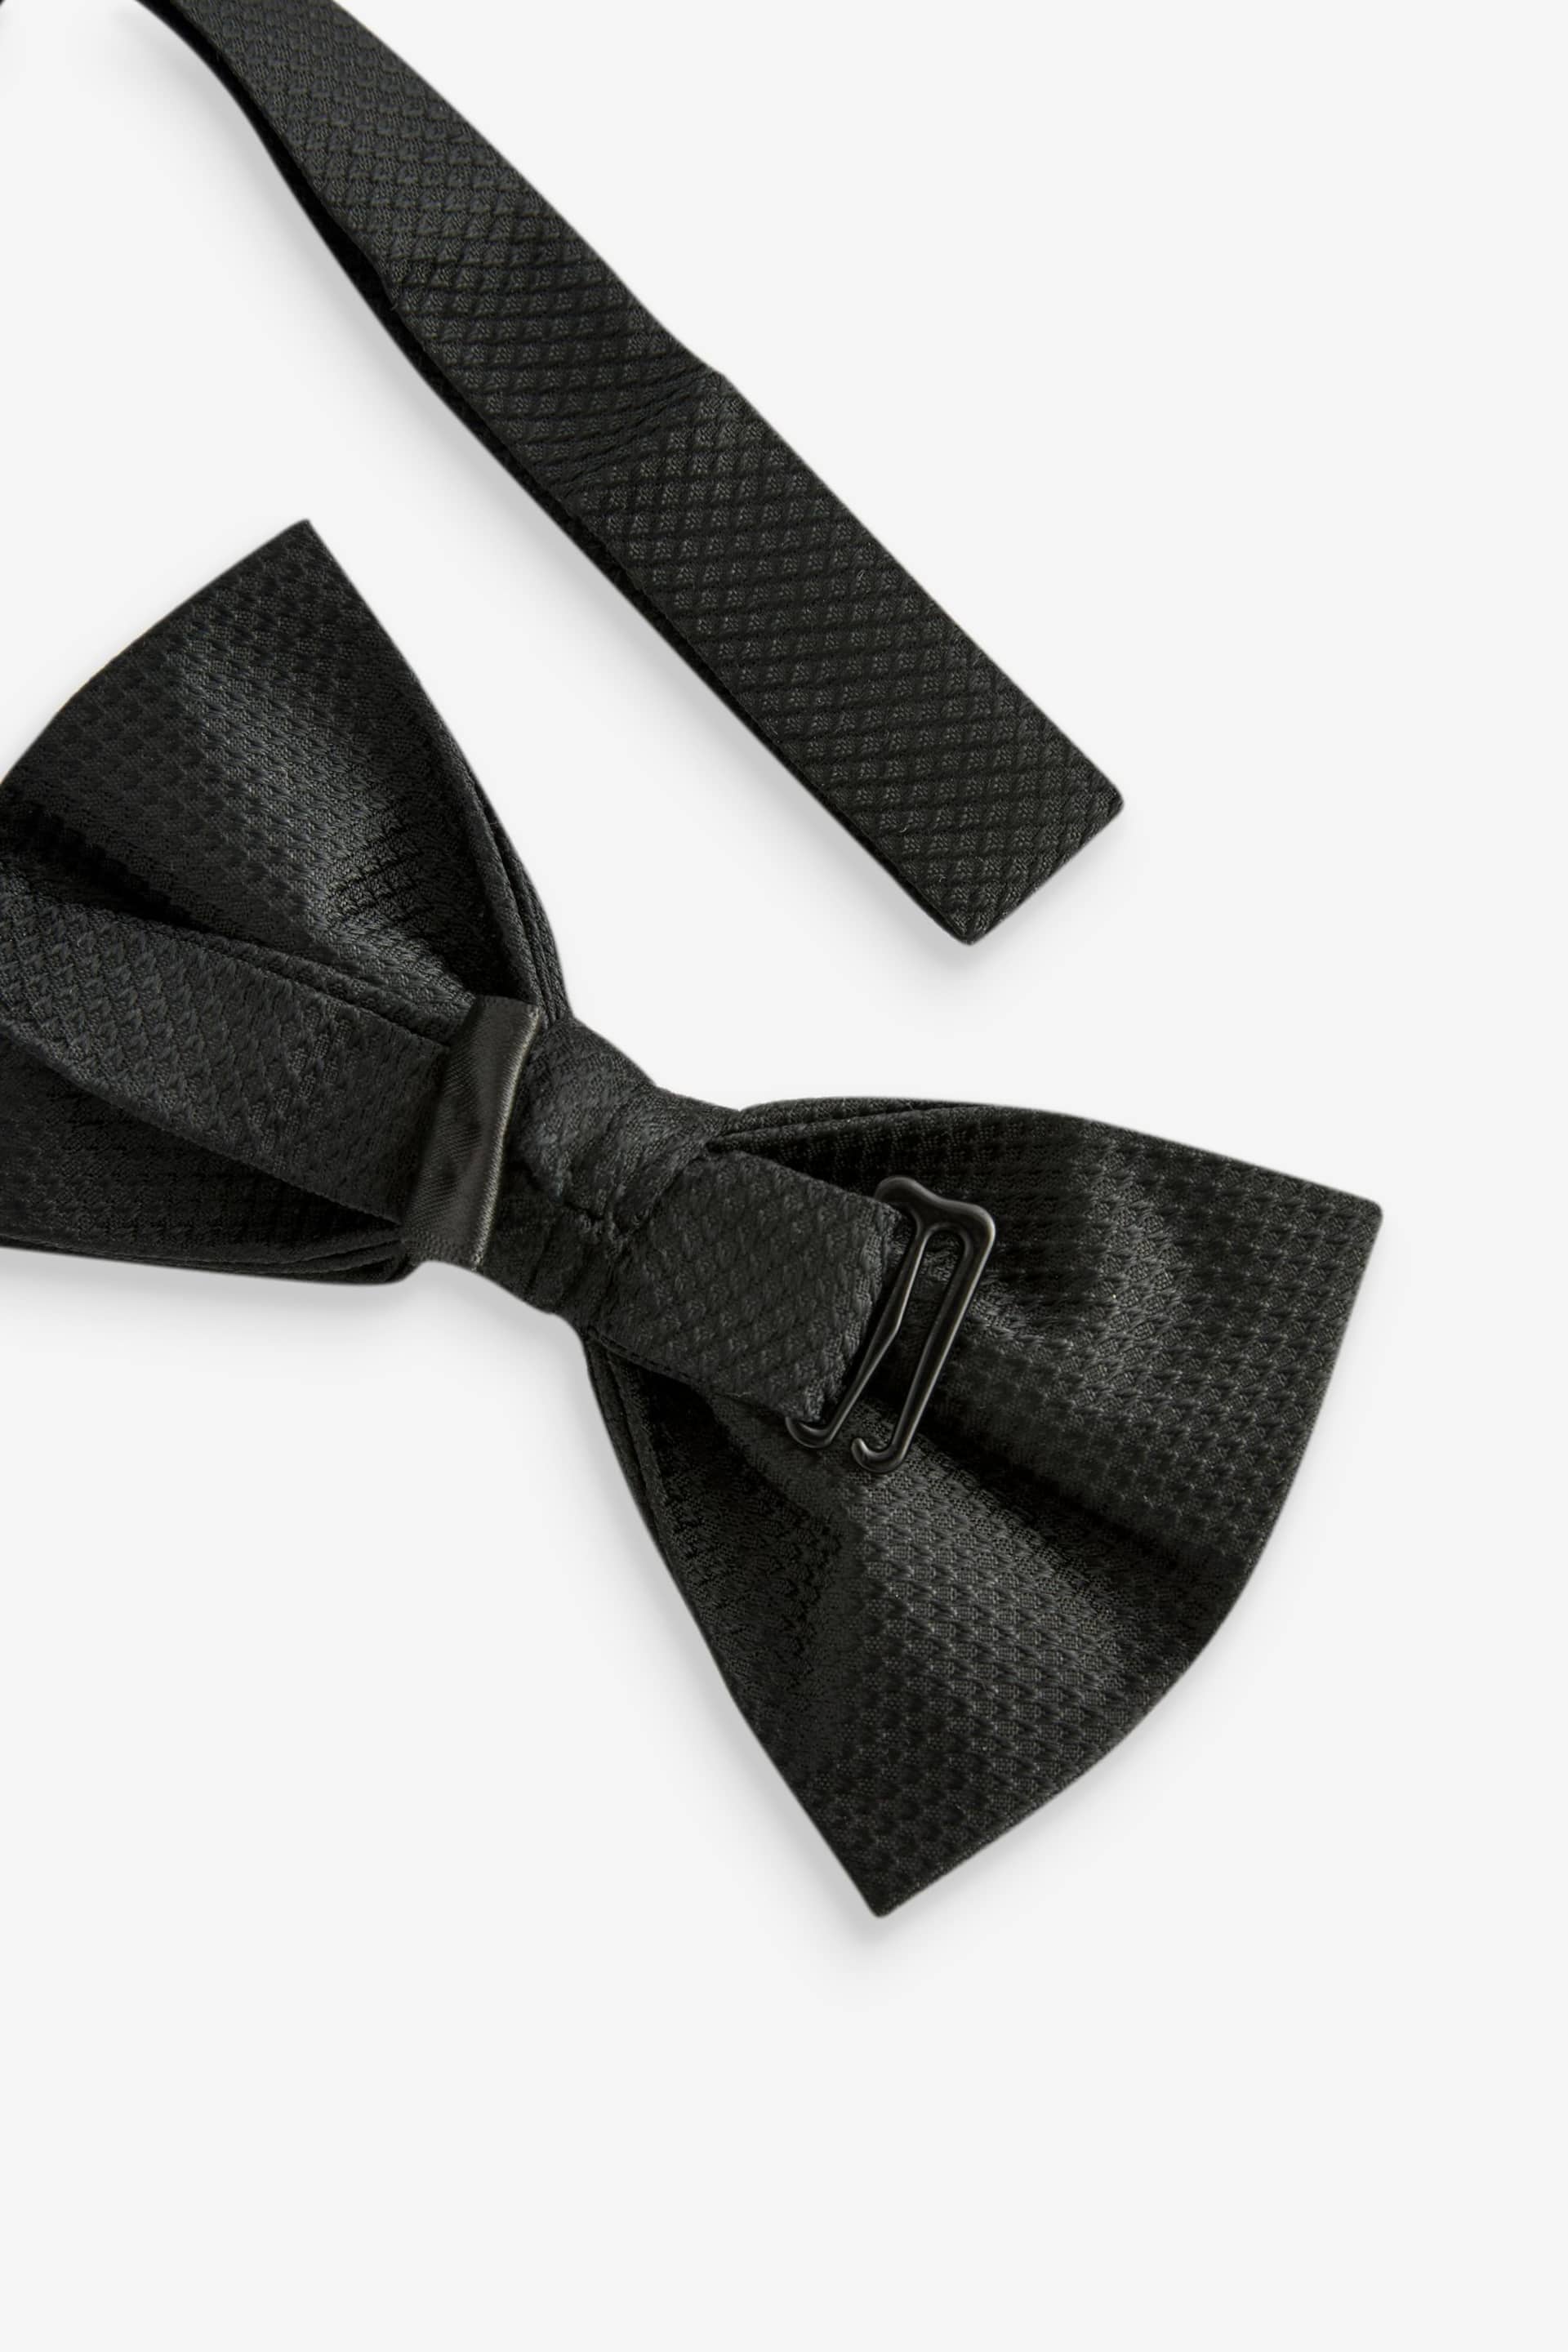 Black Textured Silk Bow Tie - Image 4 of 4